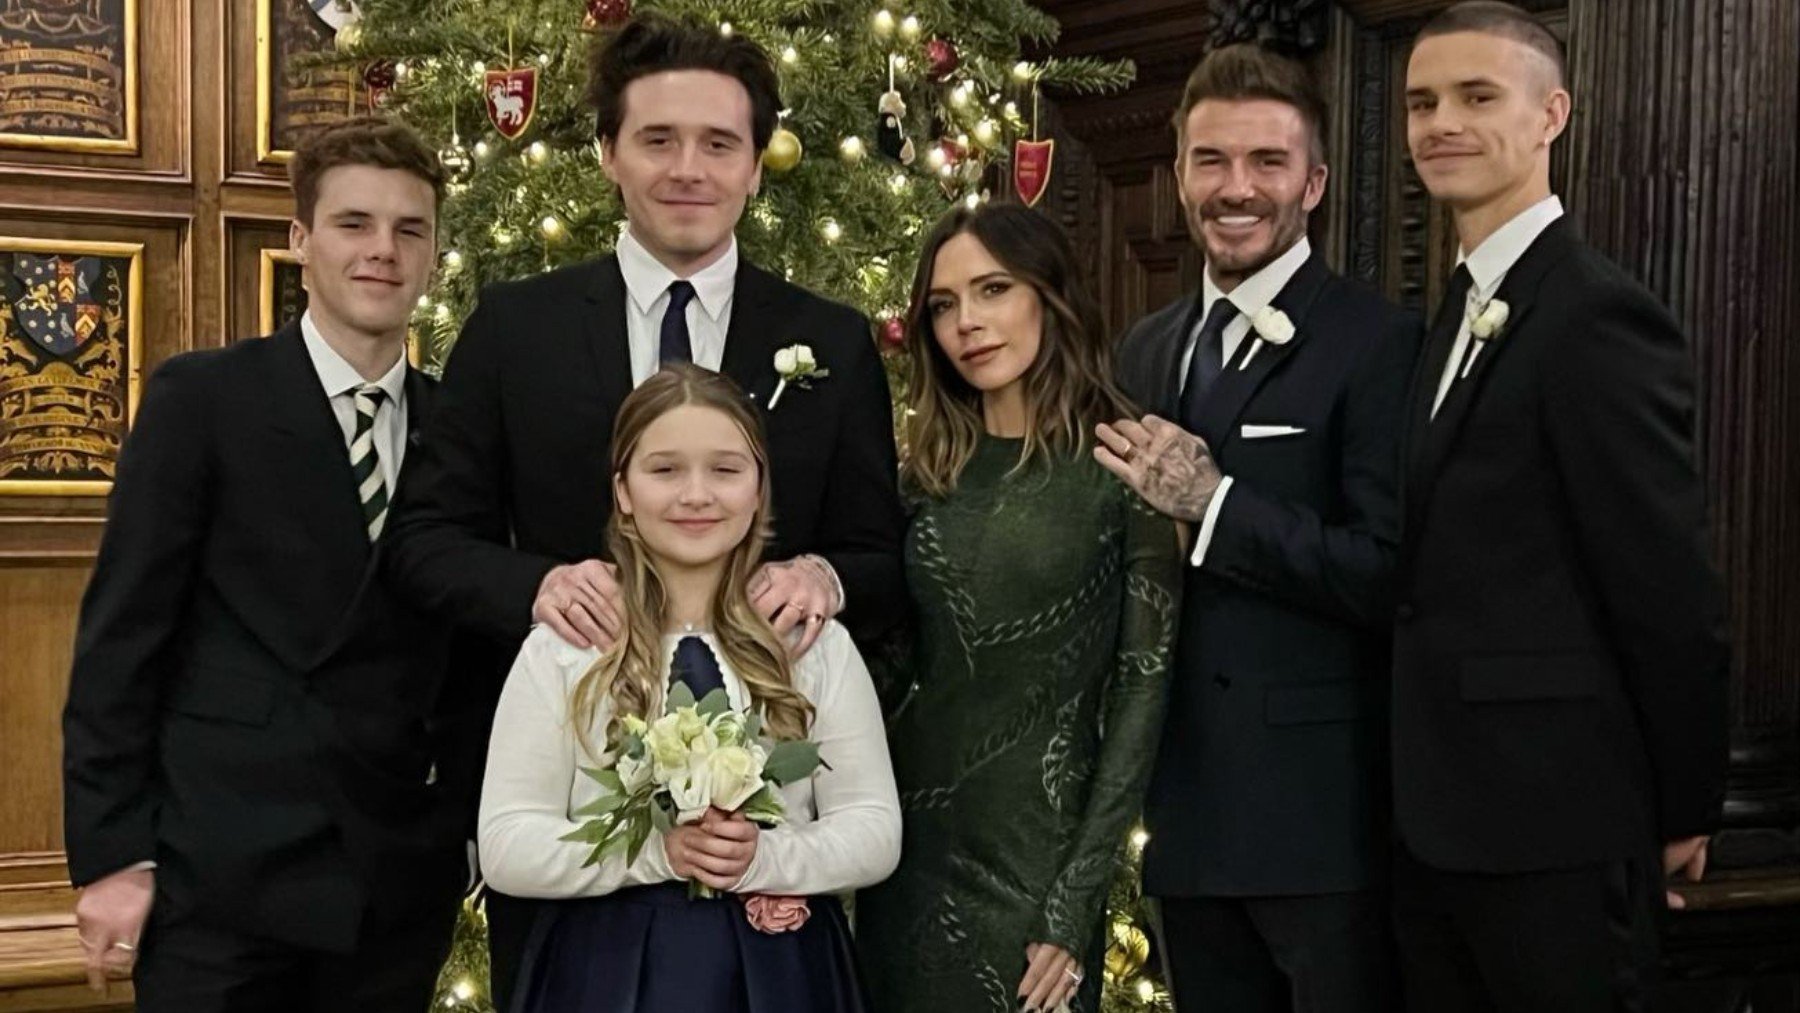 La familia Beckham al completo durante las navidades. (Foto: David Beckham)